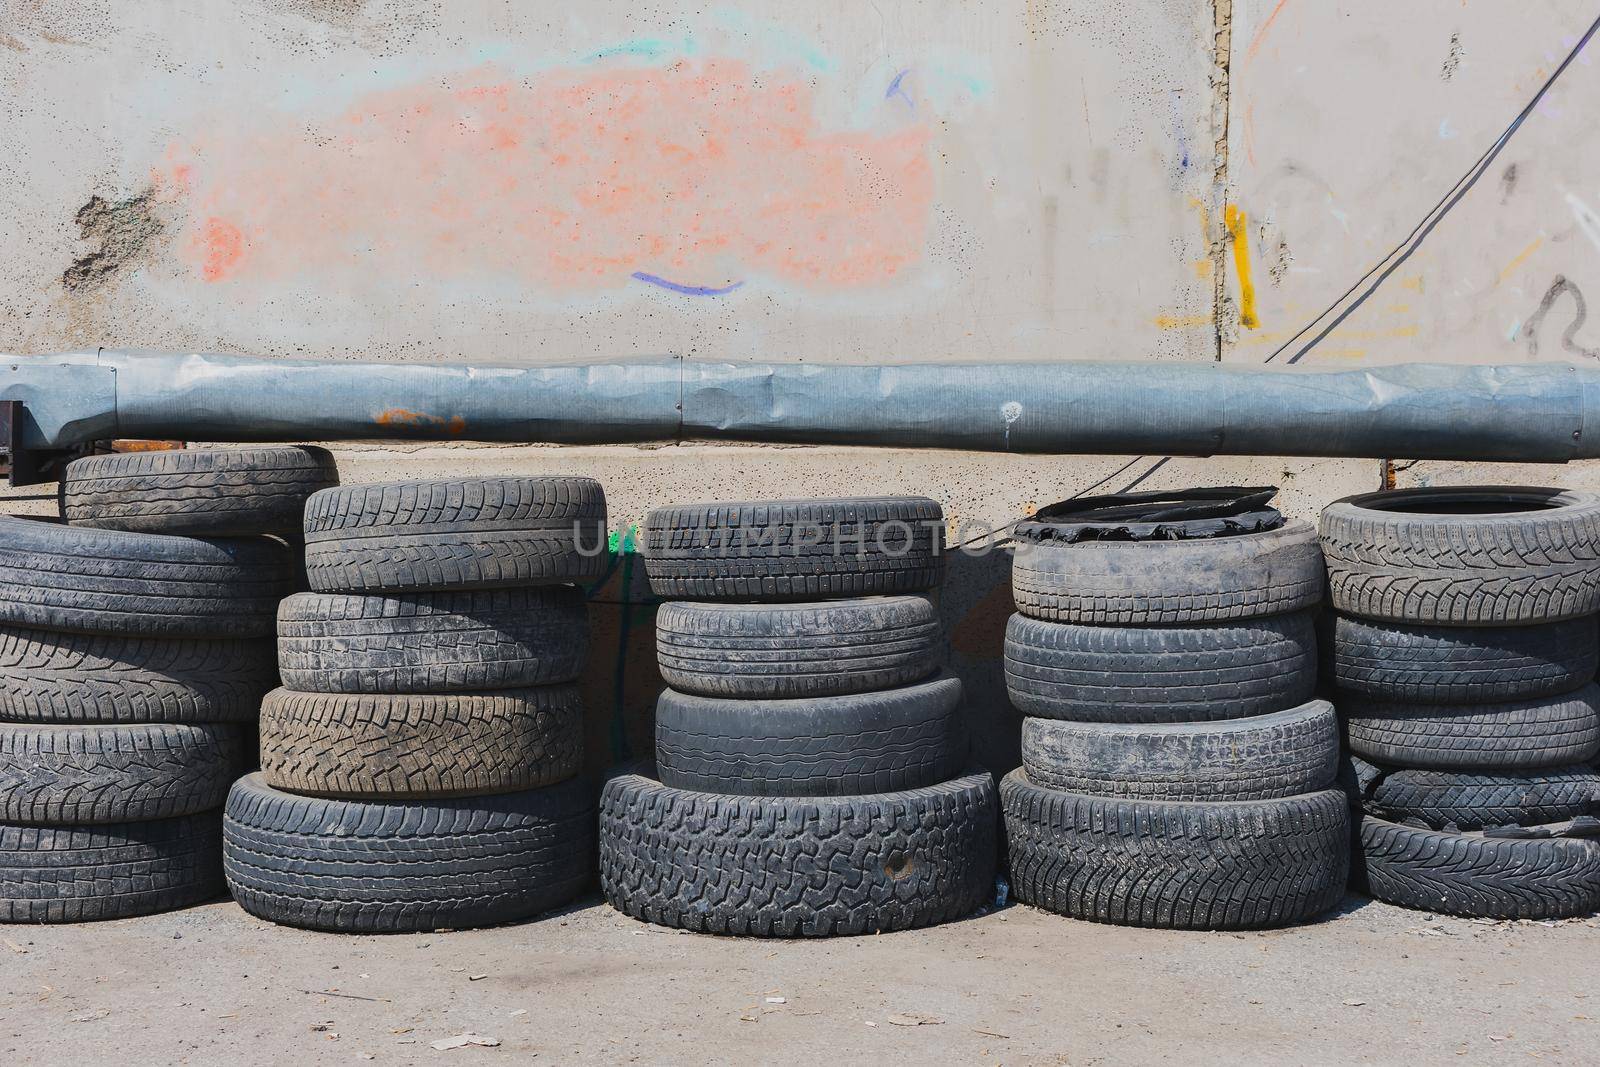 Folded worn car tires near a wall in a junkyard